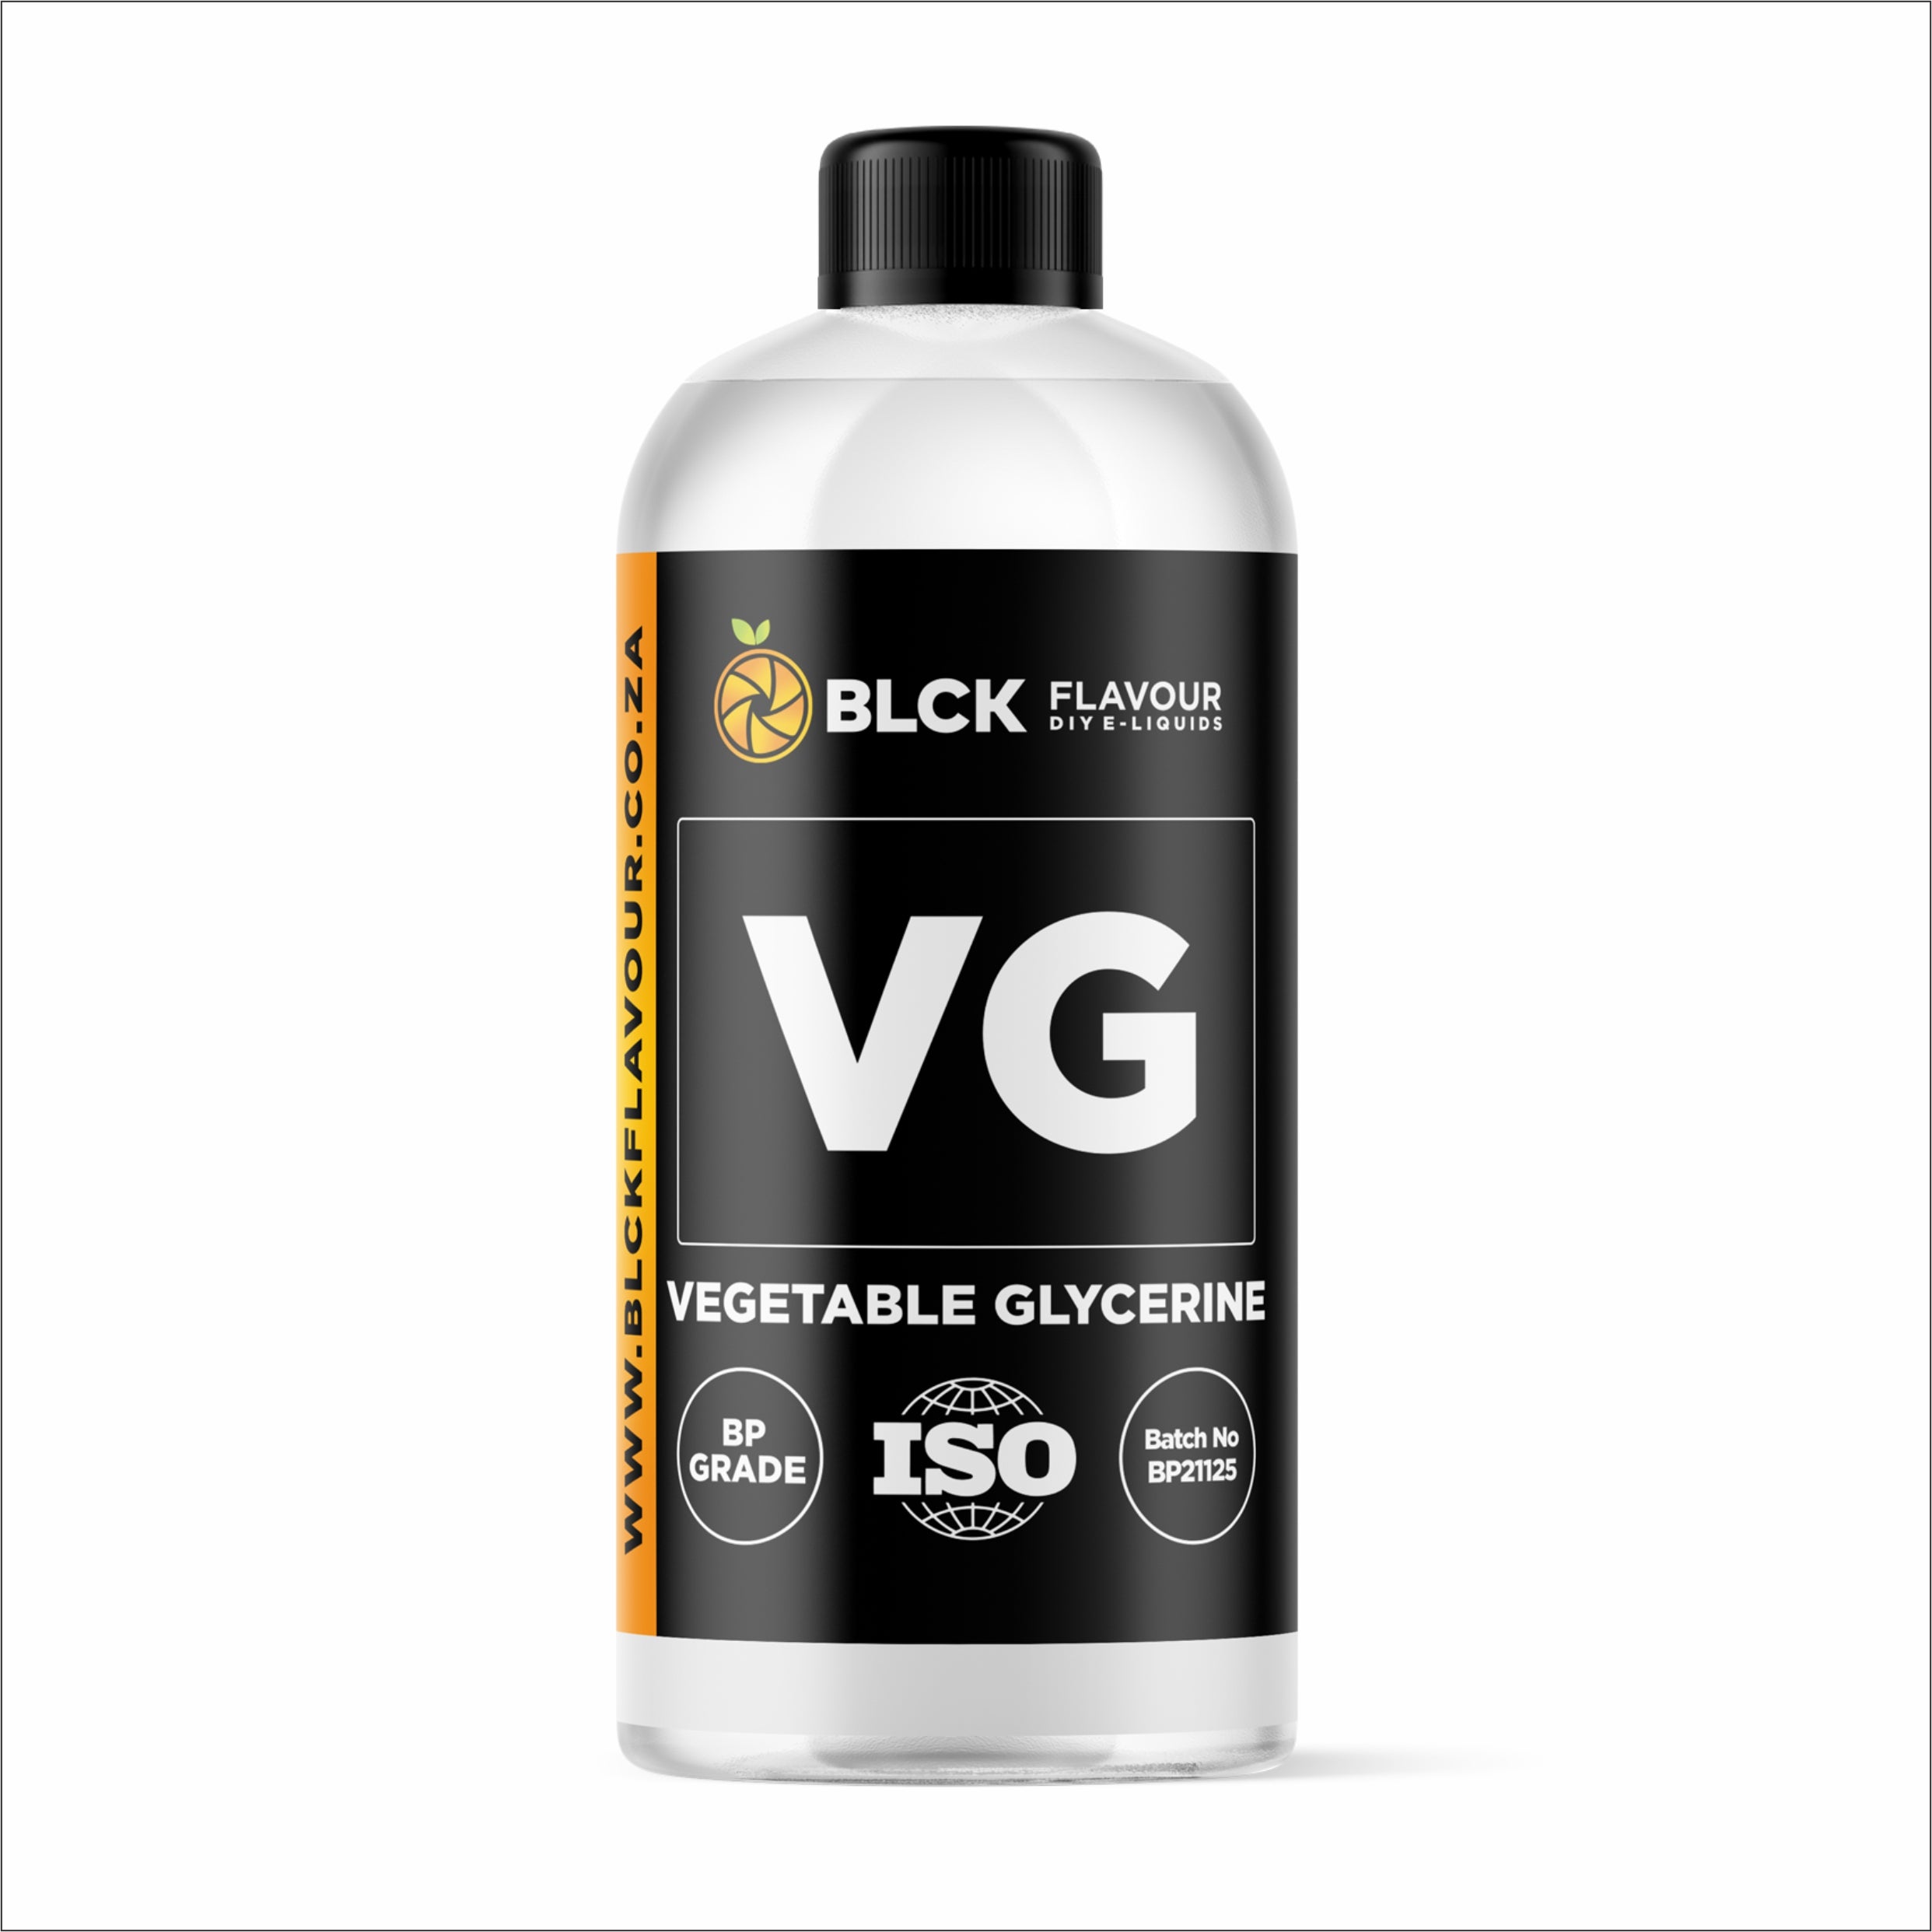 VG (Vegetable Glycerine)